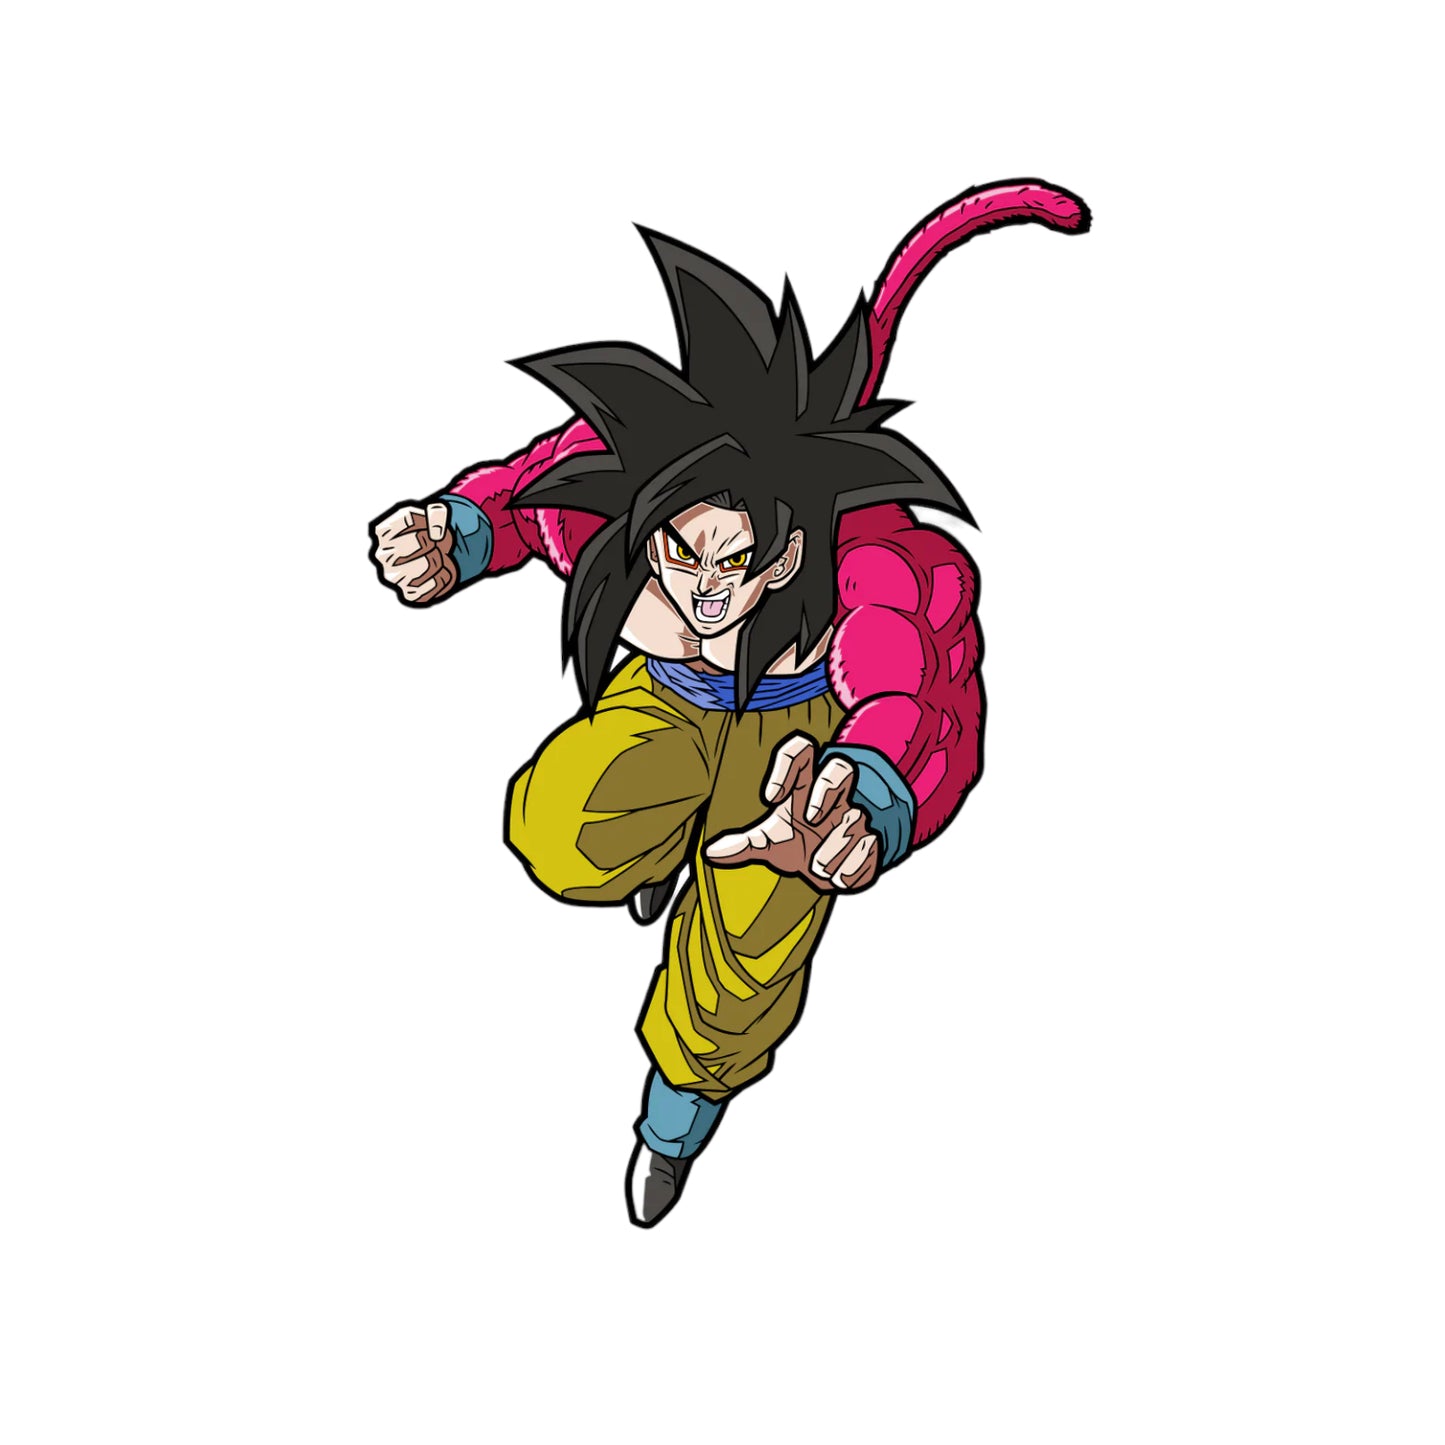 Super Saiyan 4 Goku (658)